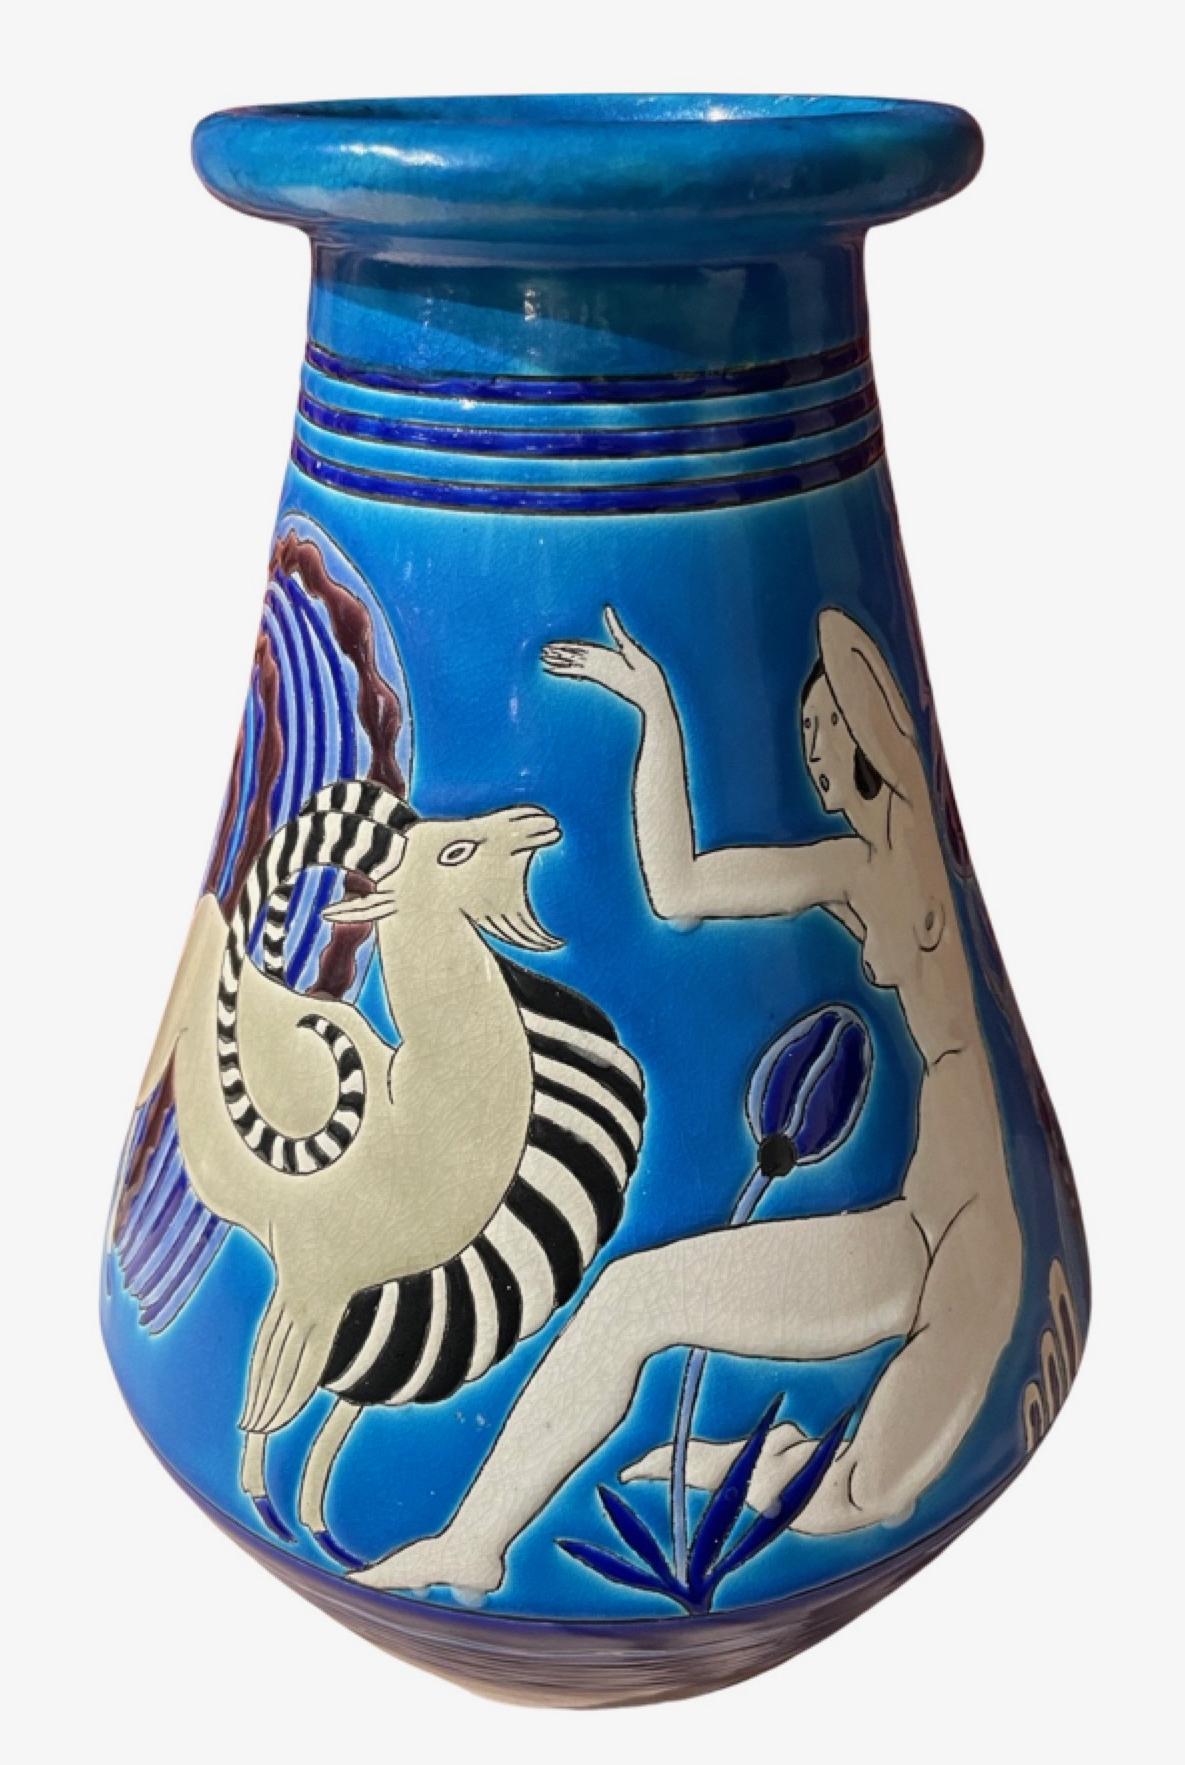 French Art Deco Ceramic Vase with Bathing Nudes by Primavera  Longwy 1925 France